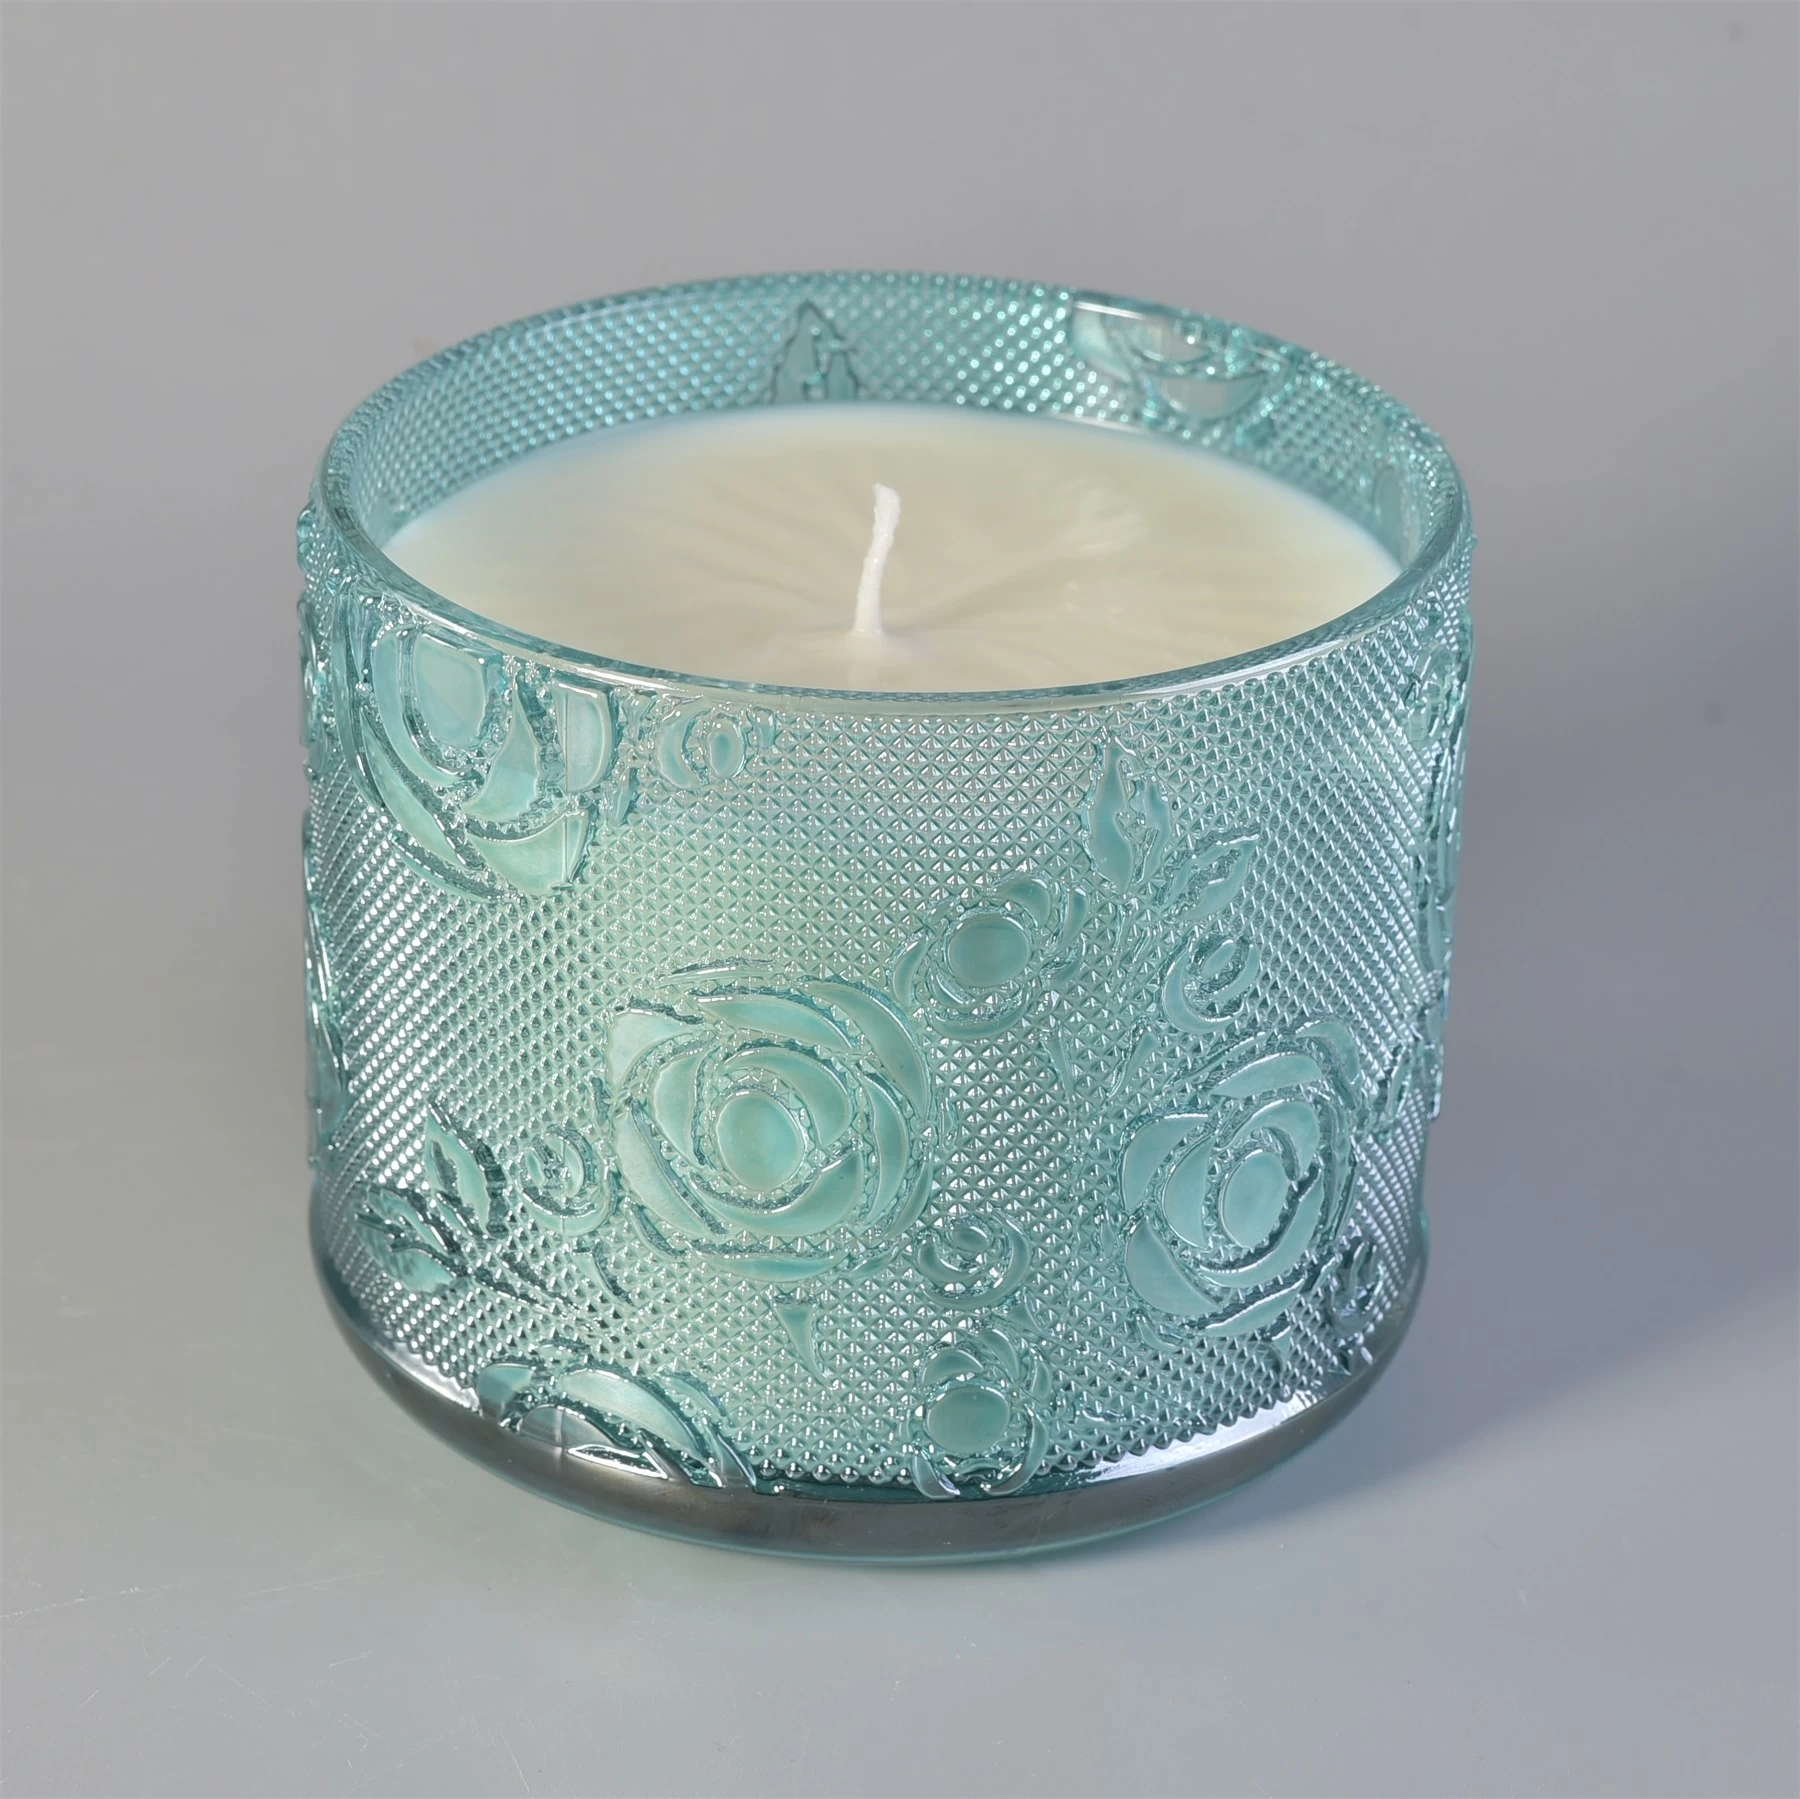 Sunny new rose design luxury tealight Glass candle jar holders